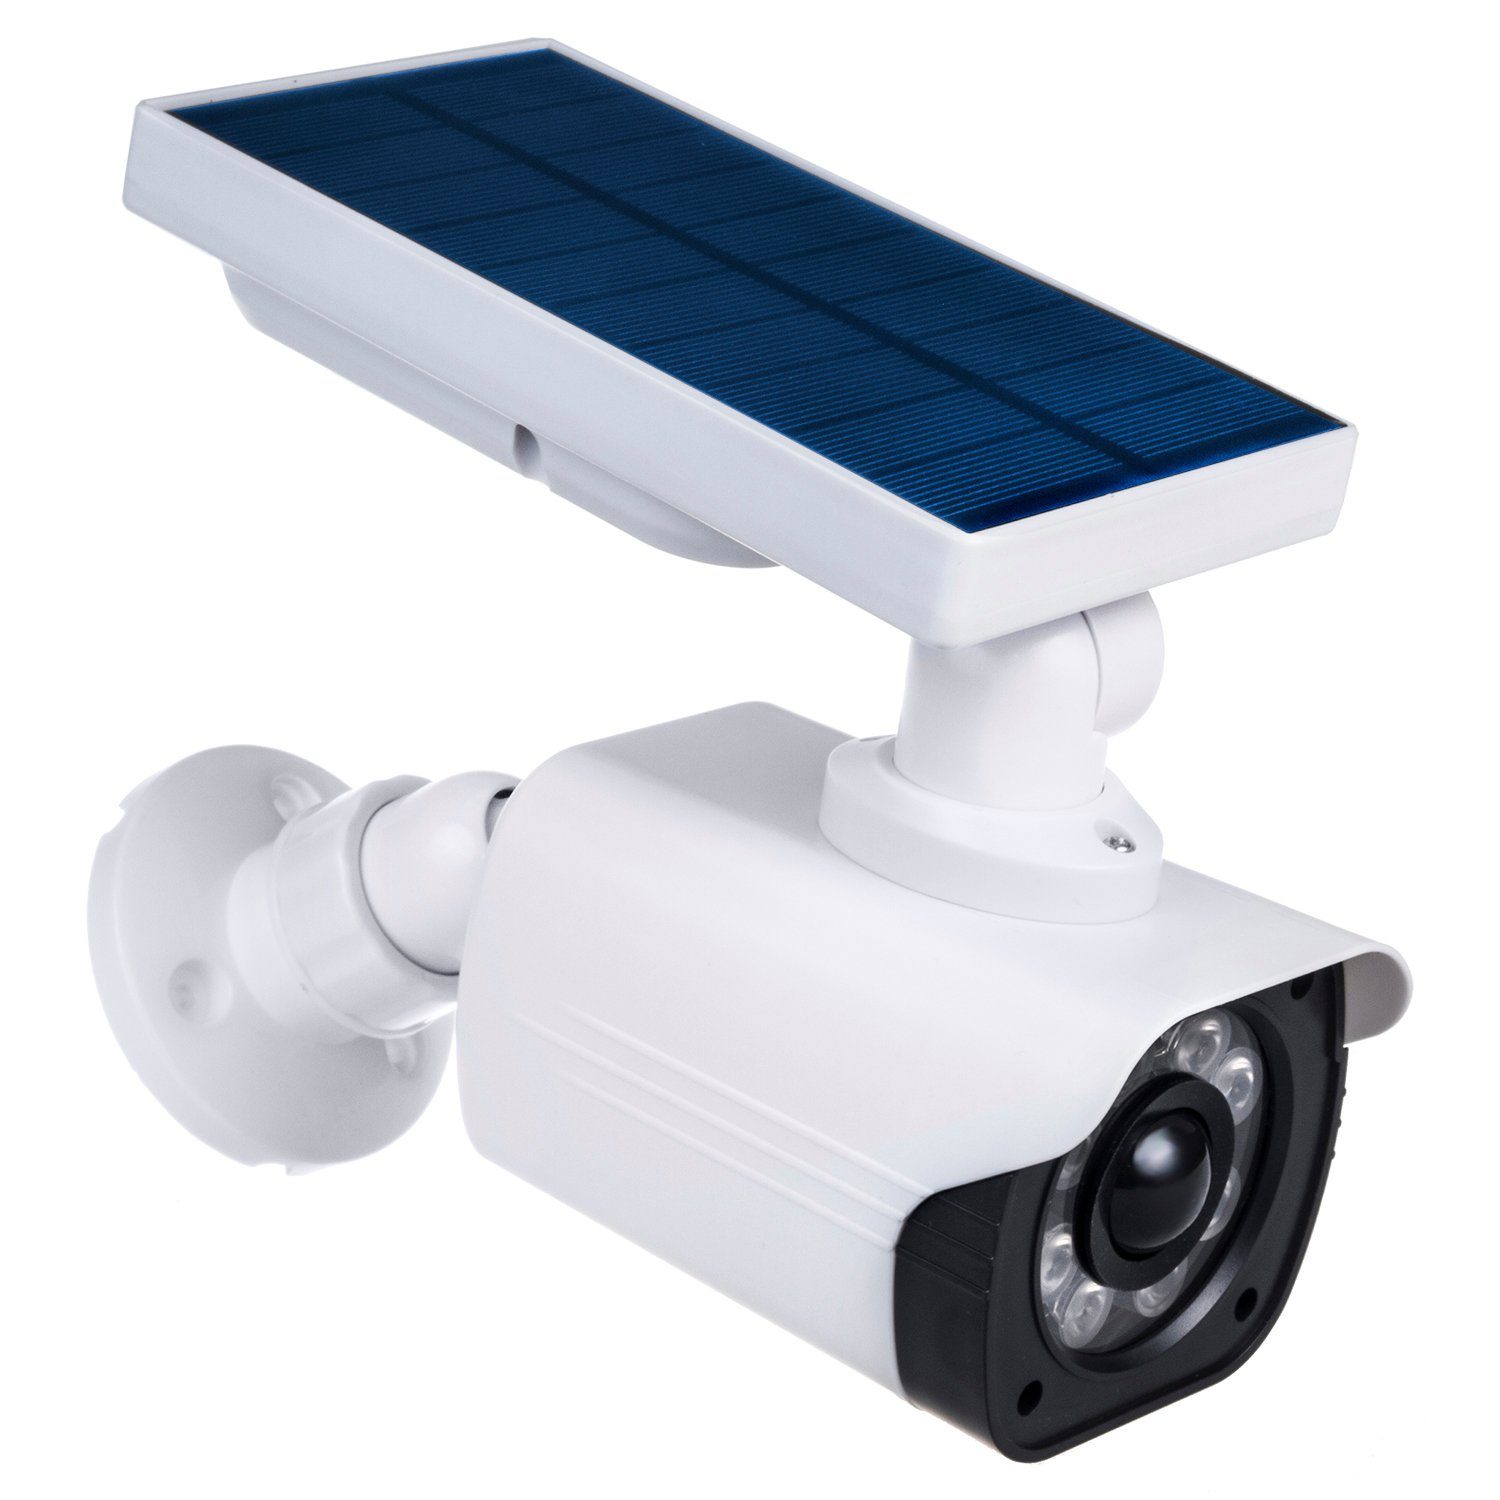 Maclean Überwachungskamera Attrappe (Solarbetrieb, LED-Beleuchtung [3  Modis], Bewegungsmelder, Dämmerungssensor)